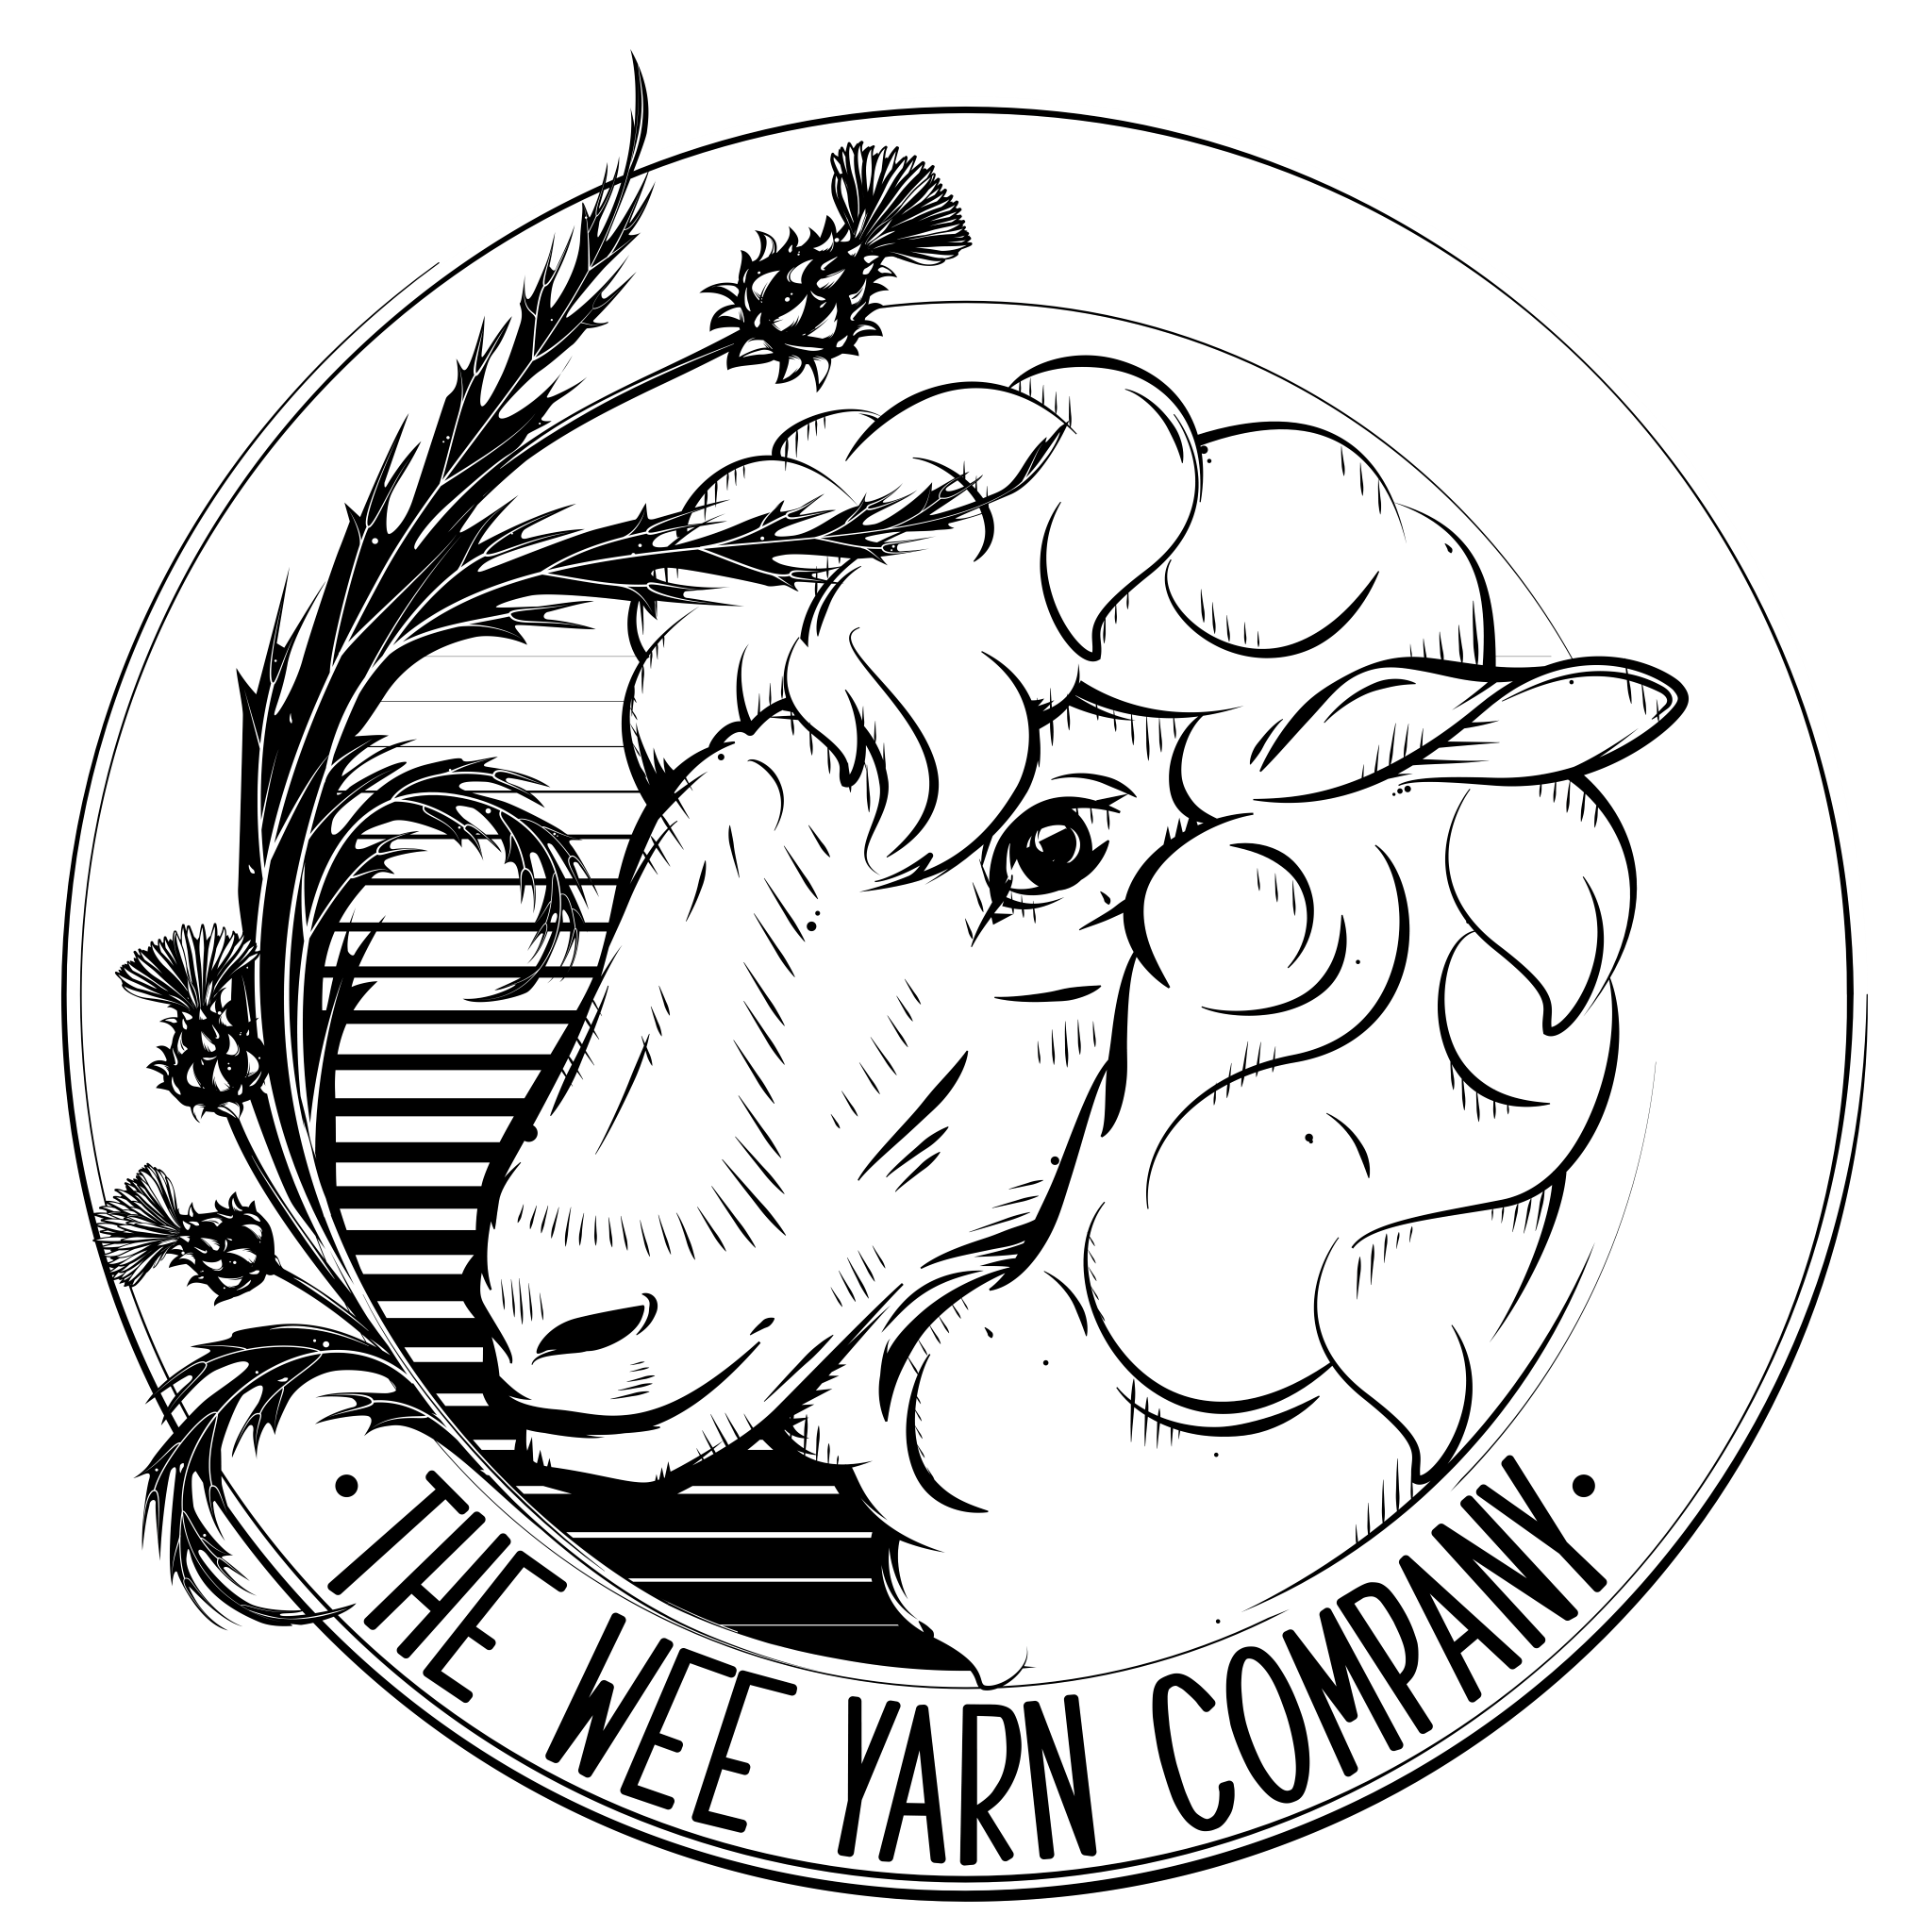 The Wee Yarn Company